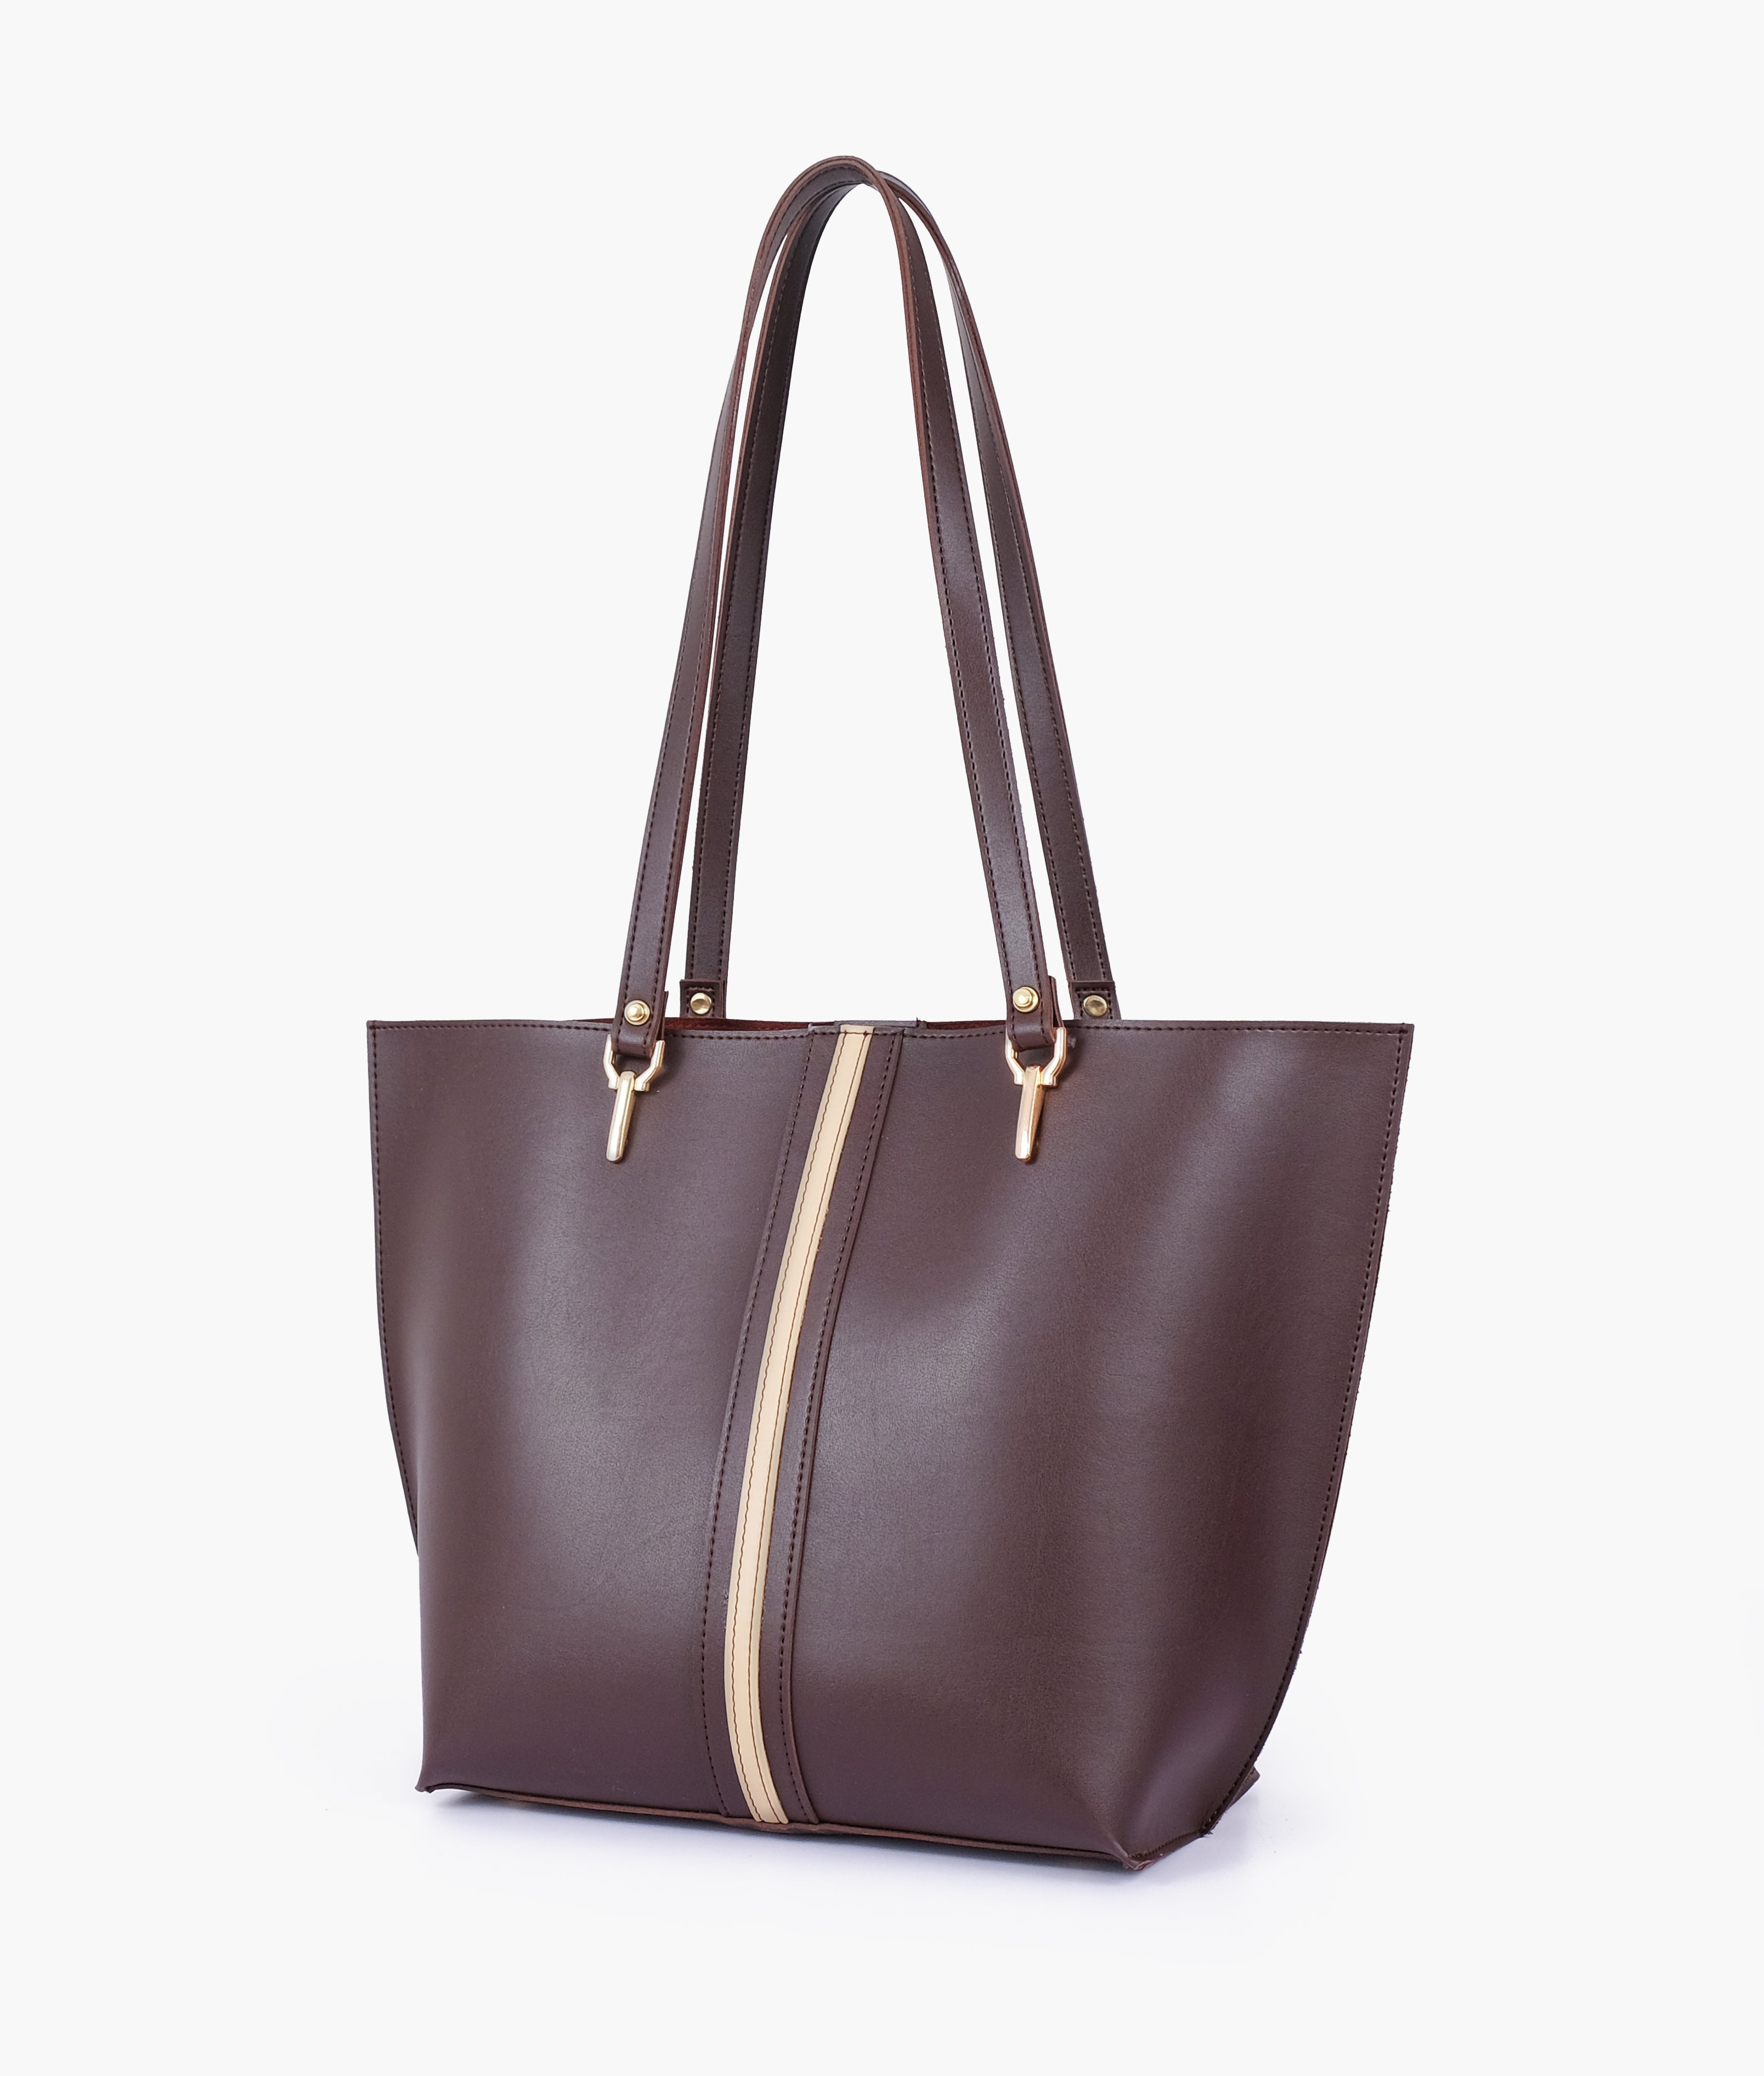 Dark brown centre-stripe tote bag